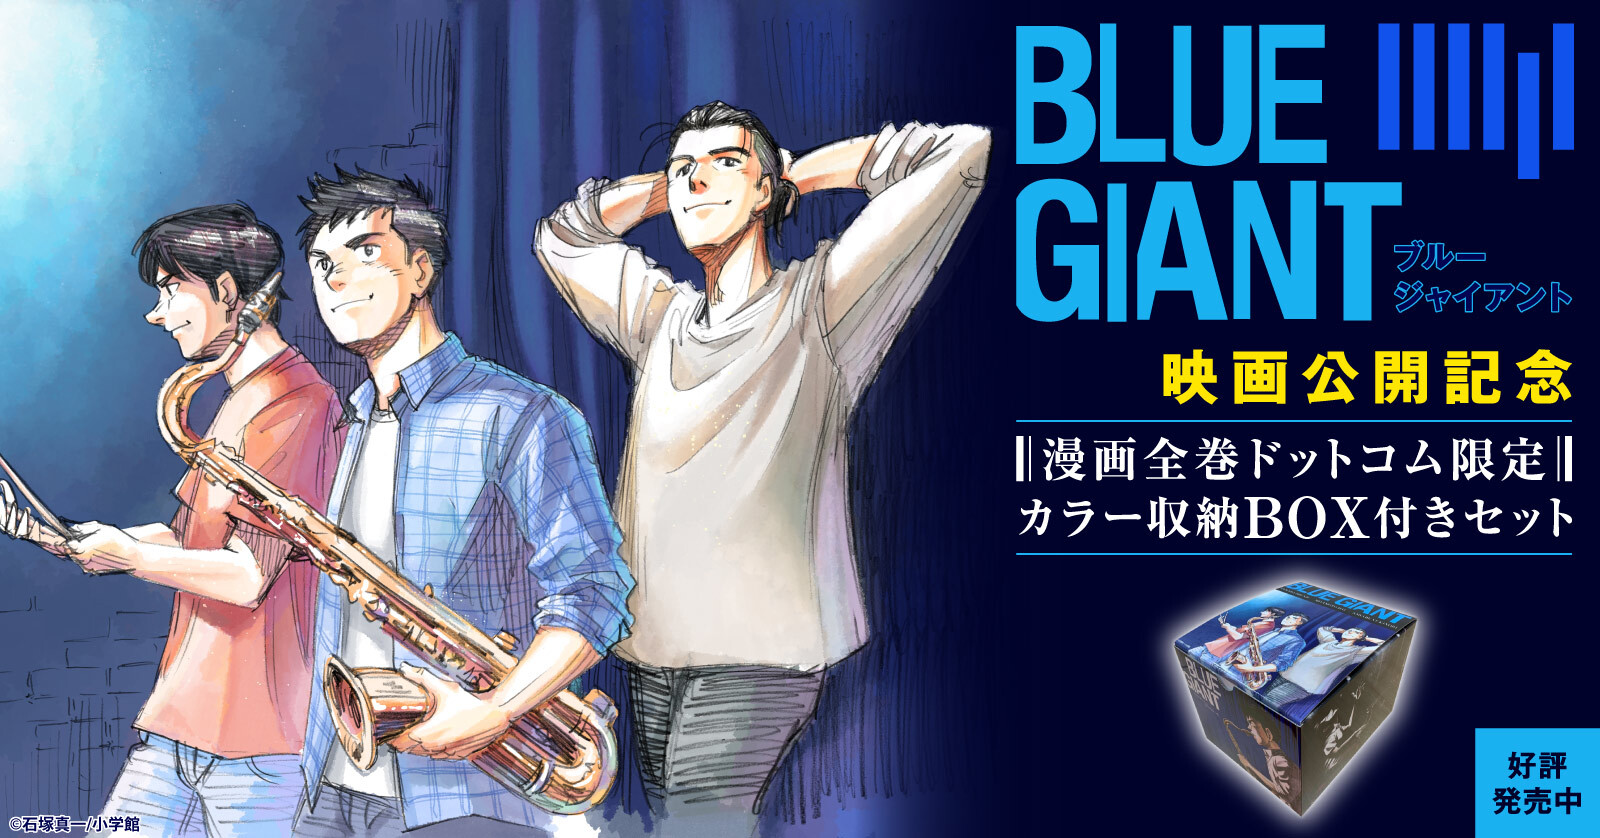 BLUE GIANT』収納BOX付きセット | 漫画全巻ドットコム